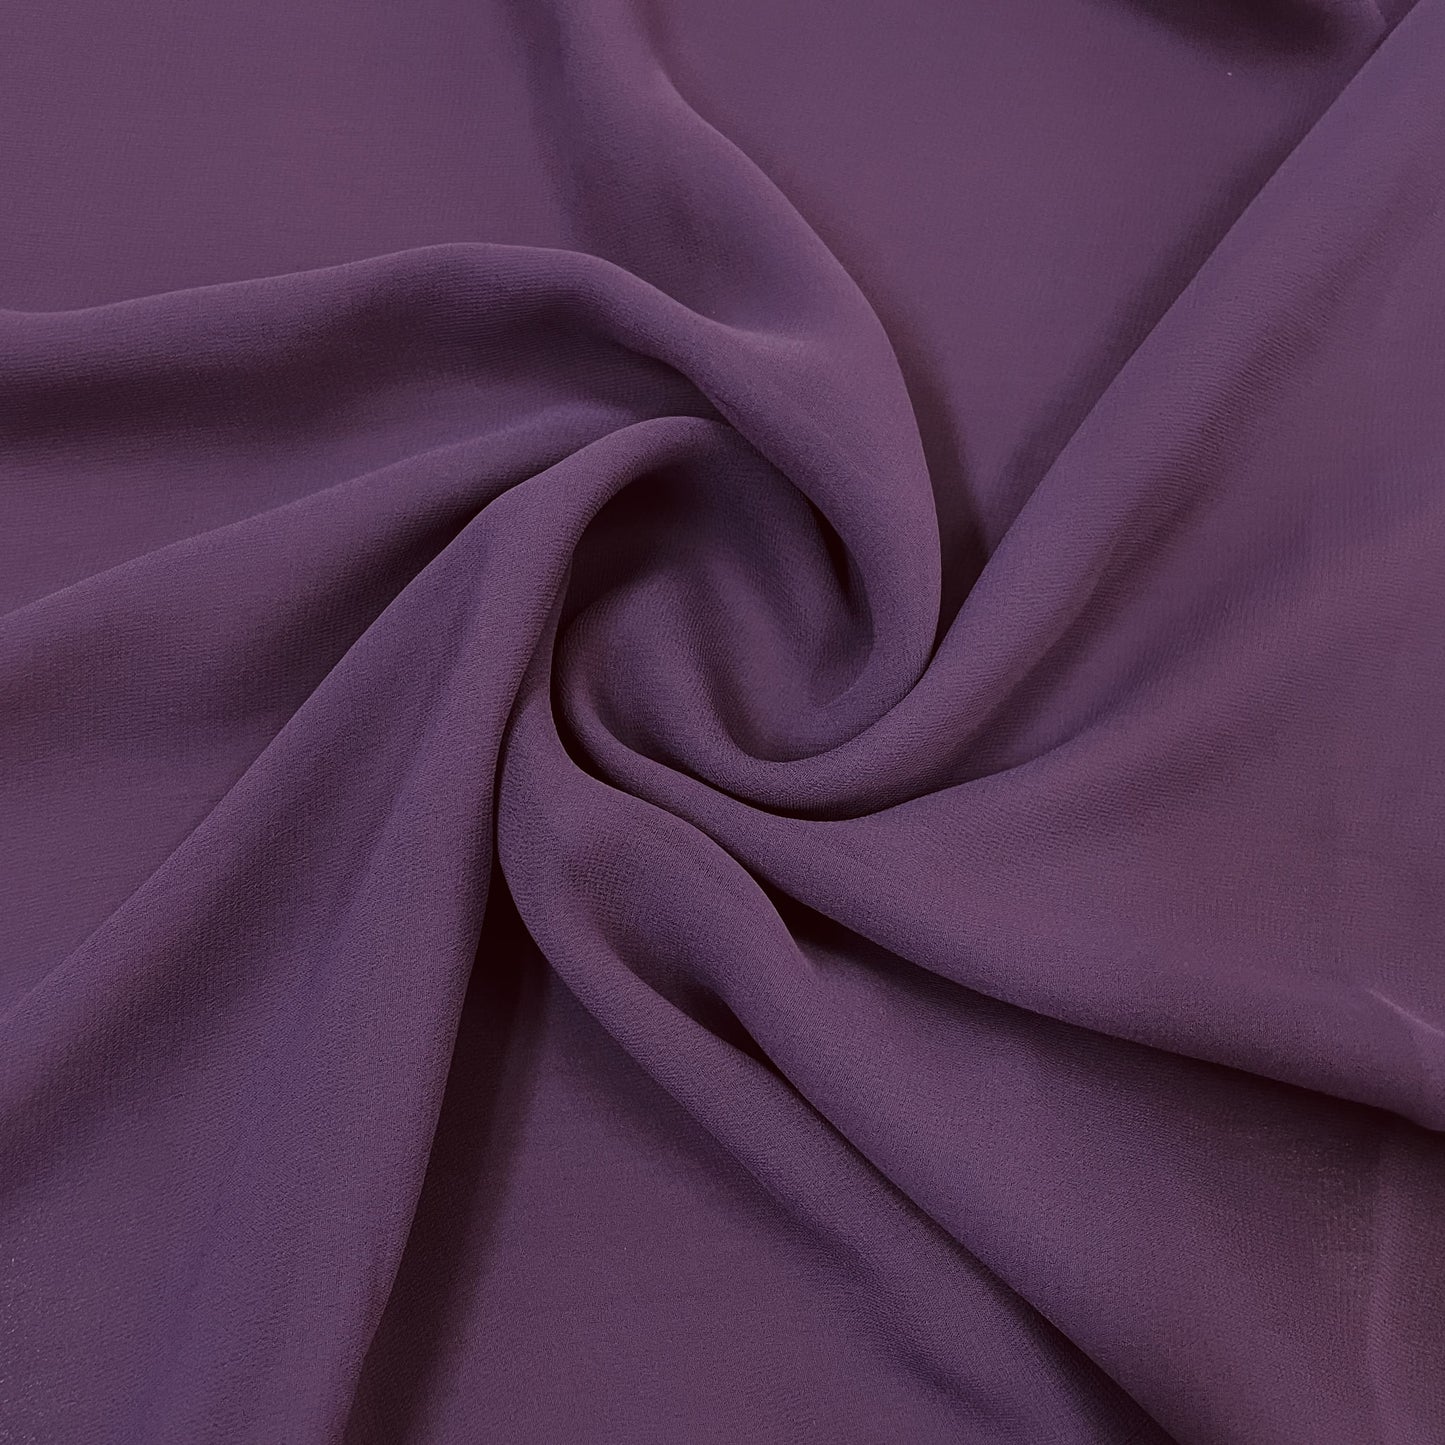 classic light purple solid georgette fabric